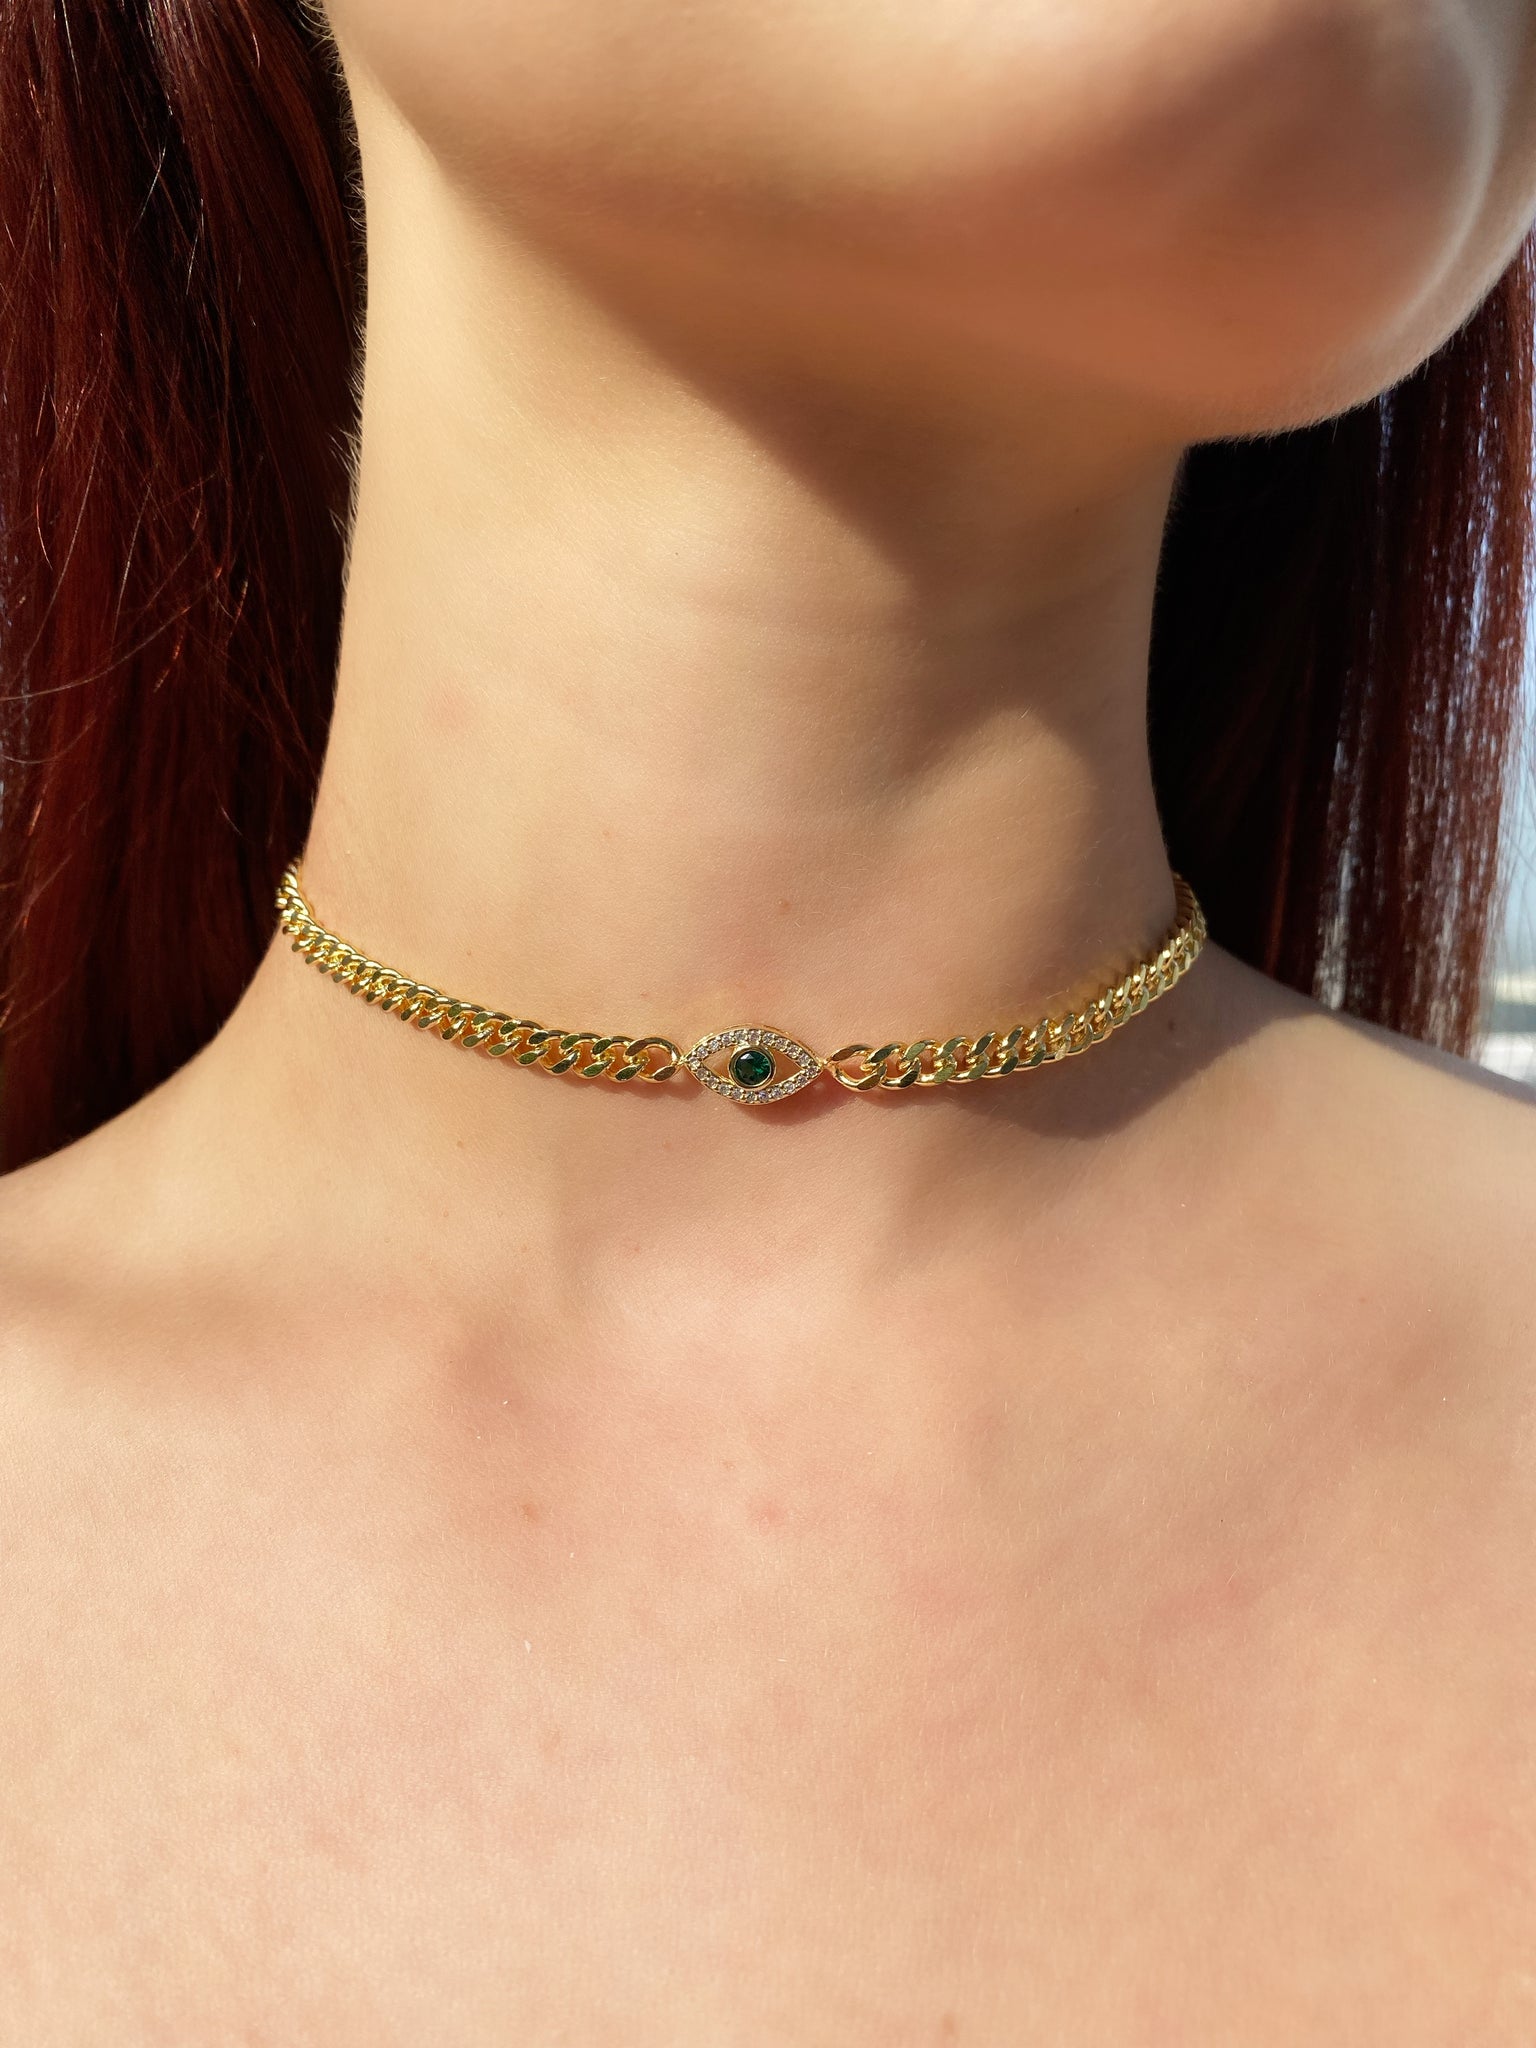 Emerald eye chain choker necklace on model